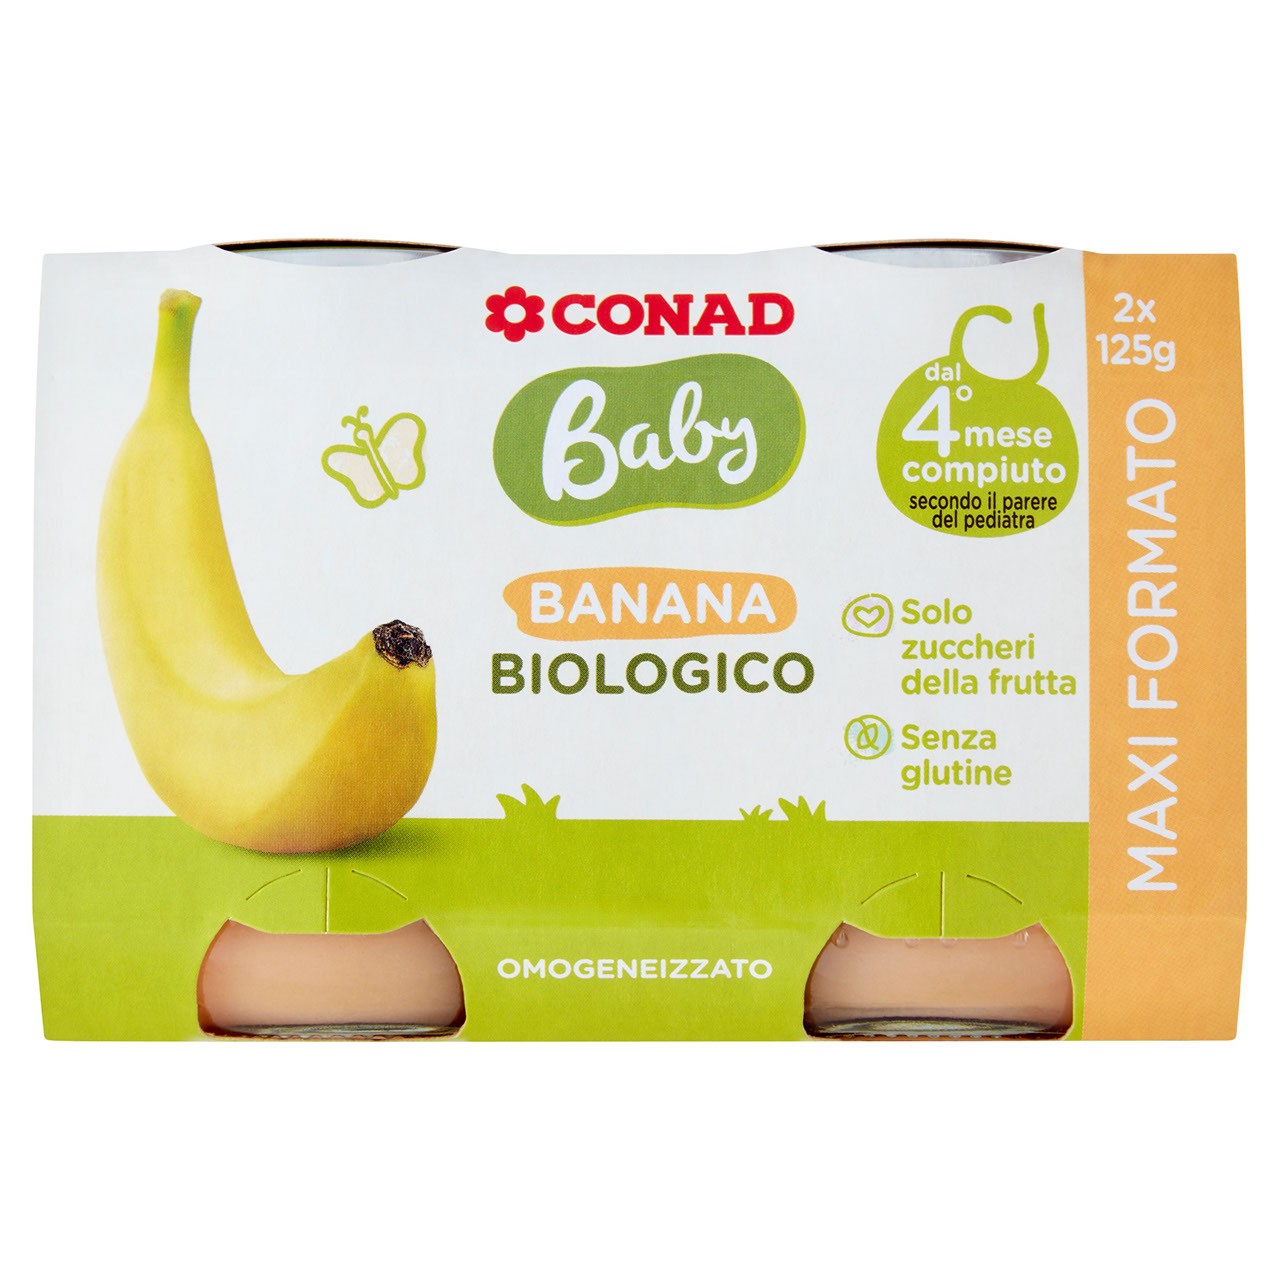 Baby-Omogenizzato-Biologico-Banana-Conad